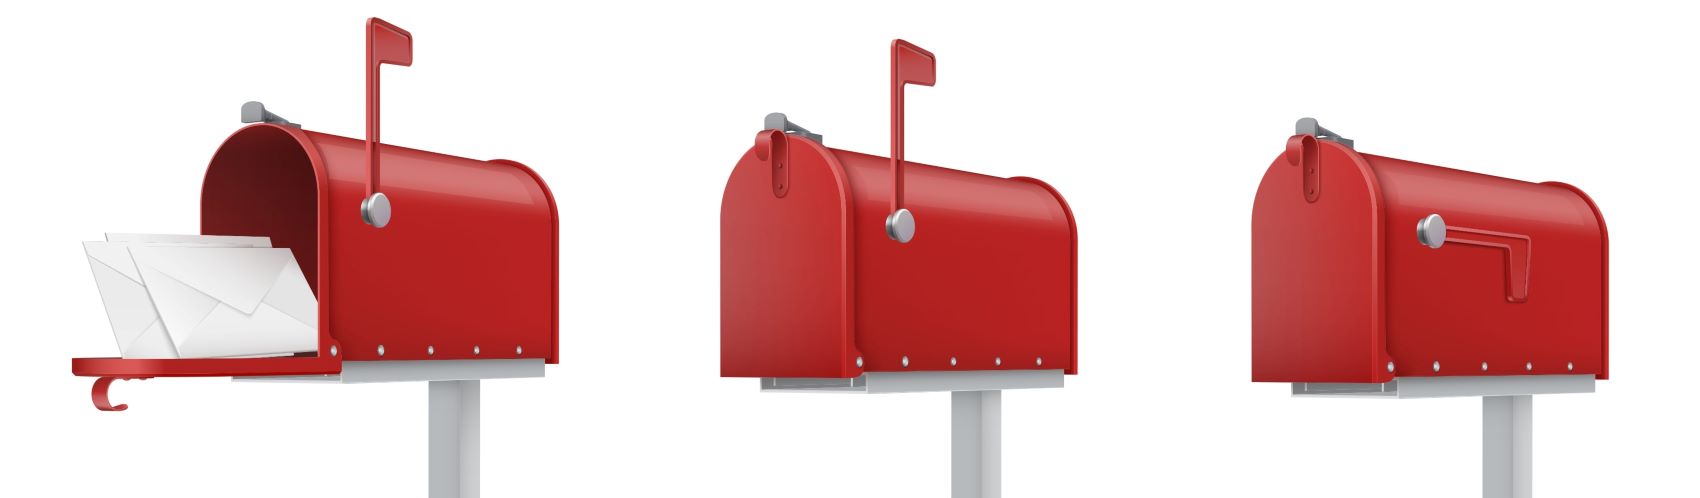 Mass mailing benefits